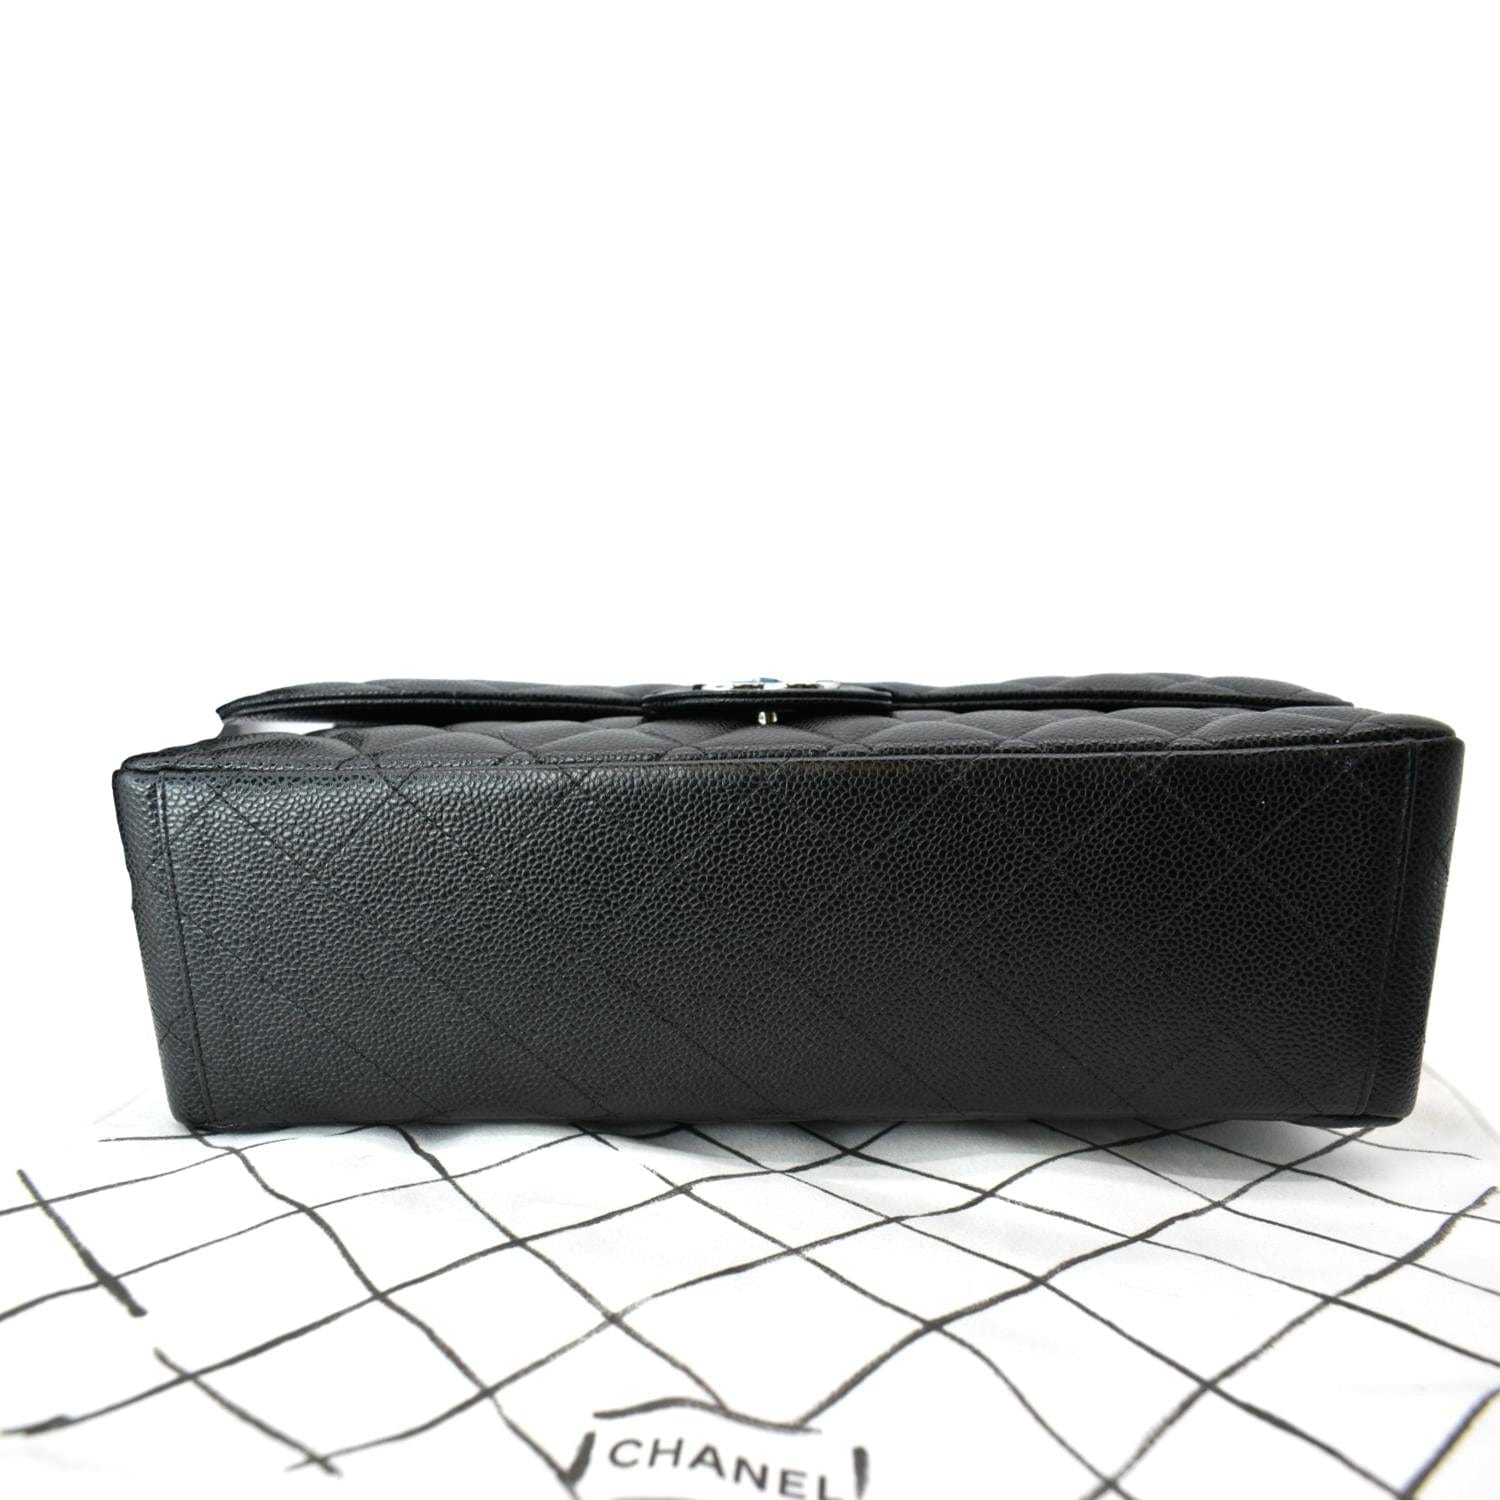 68756 auth CHANEL black Soft Caviar leather ELASTIC FLAP MAXI Hobo